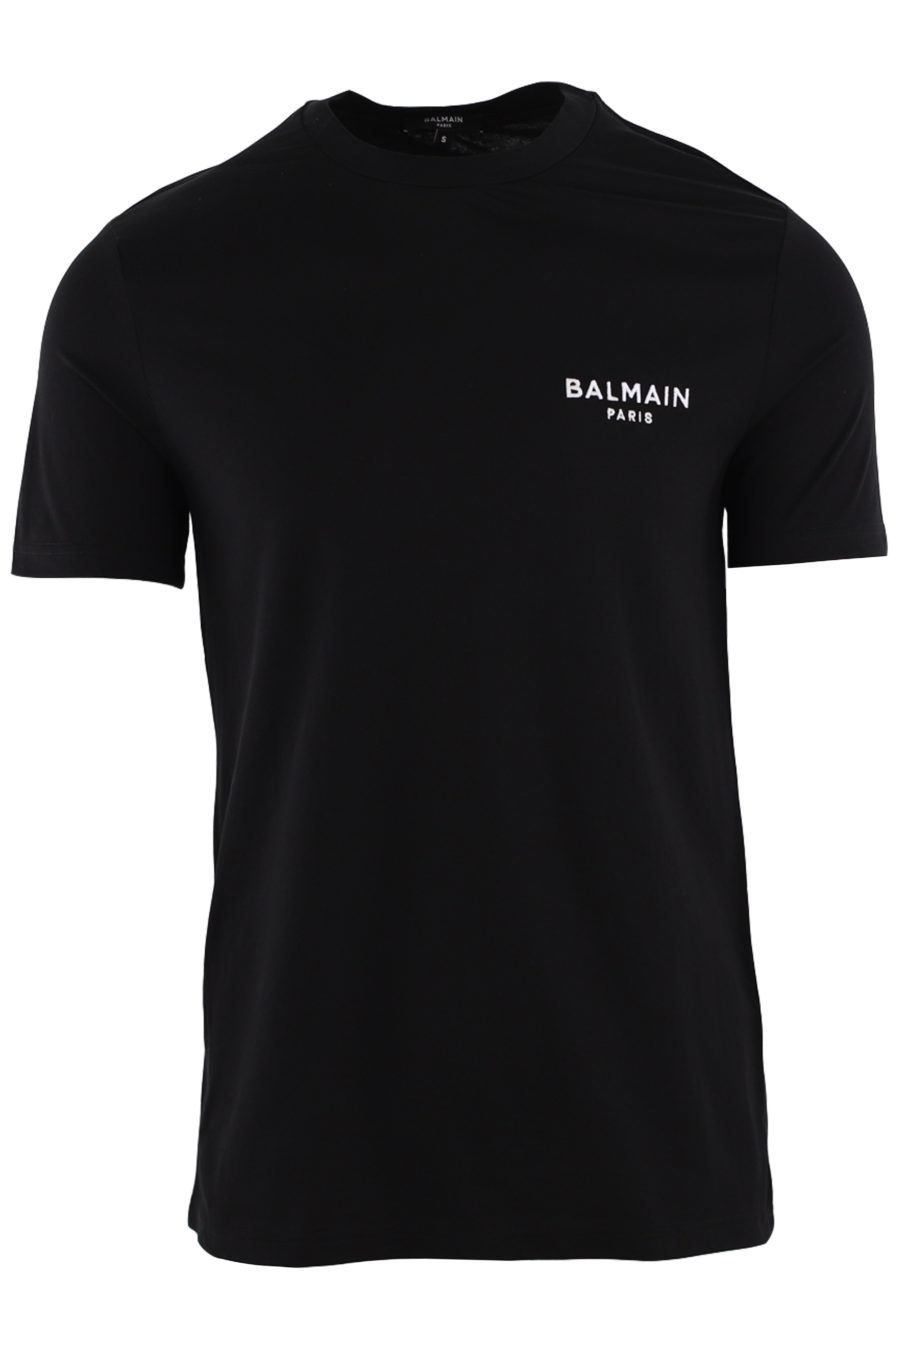 Camiseta interior negra con logo blanco - IMG 8796